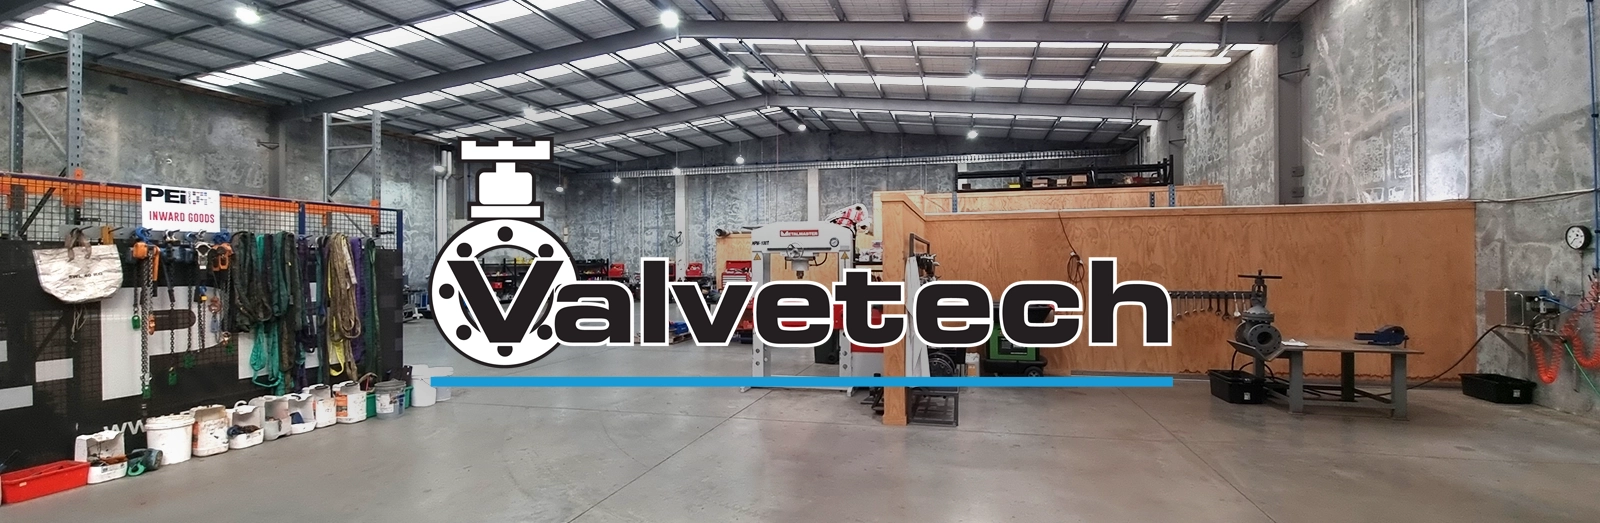 Inside the industrial valve engineering workshop Valvetech in Christchurch